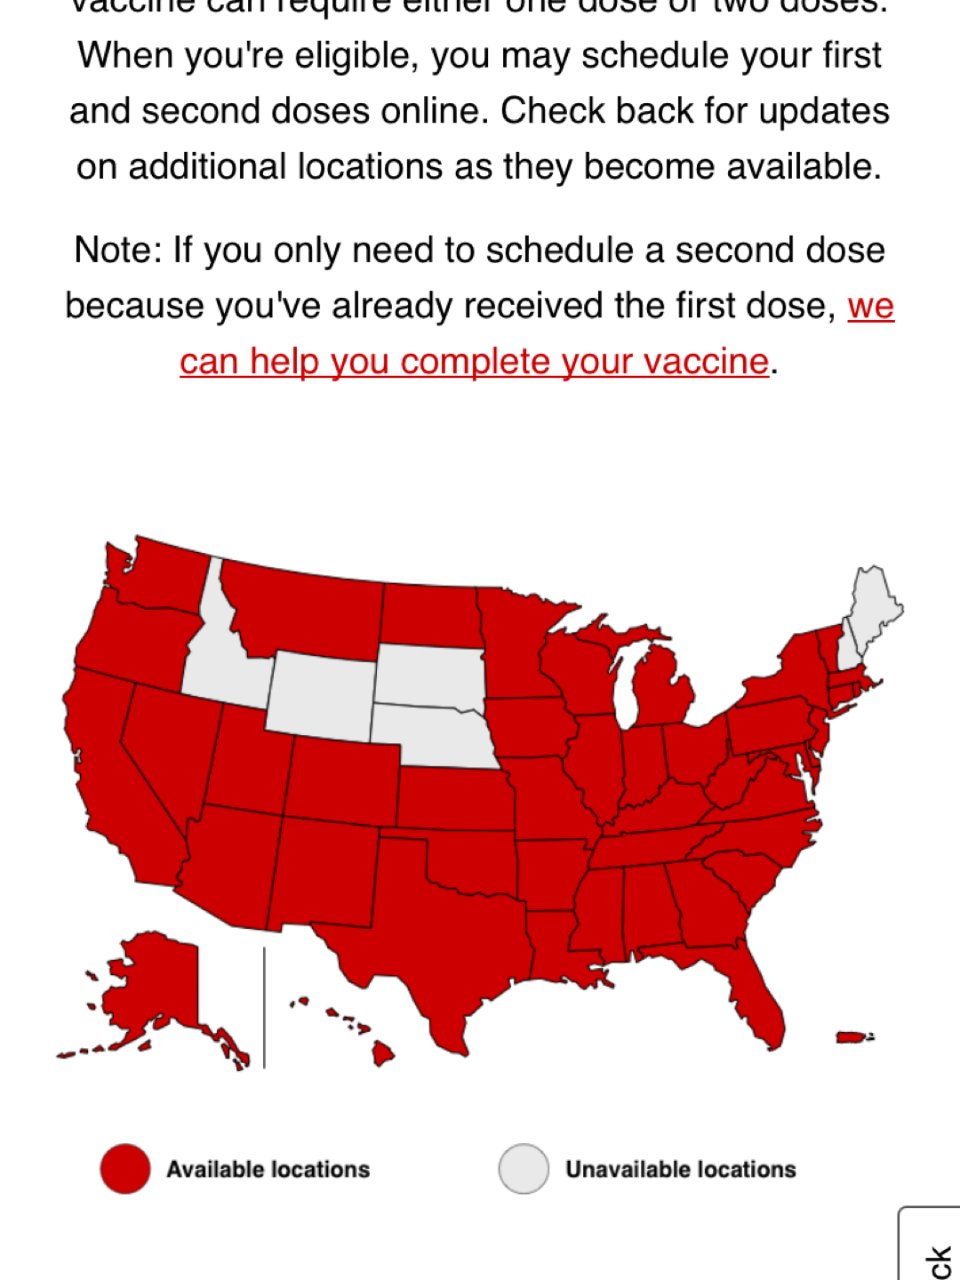 Kansas 16+疫苗开打...